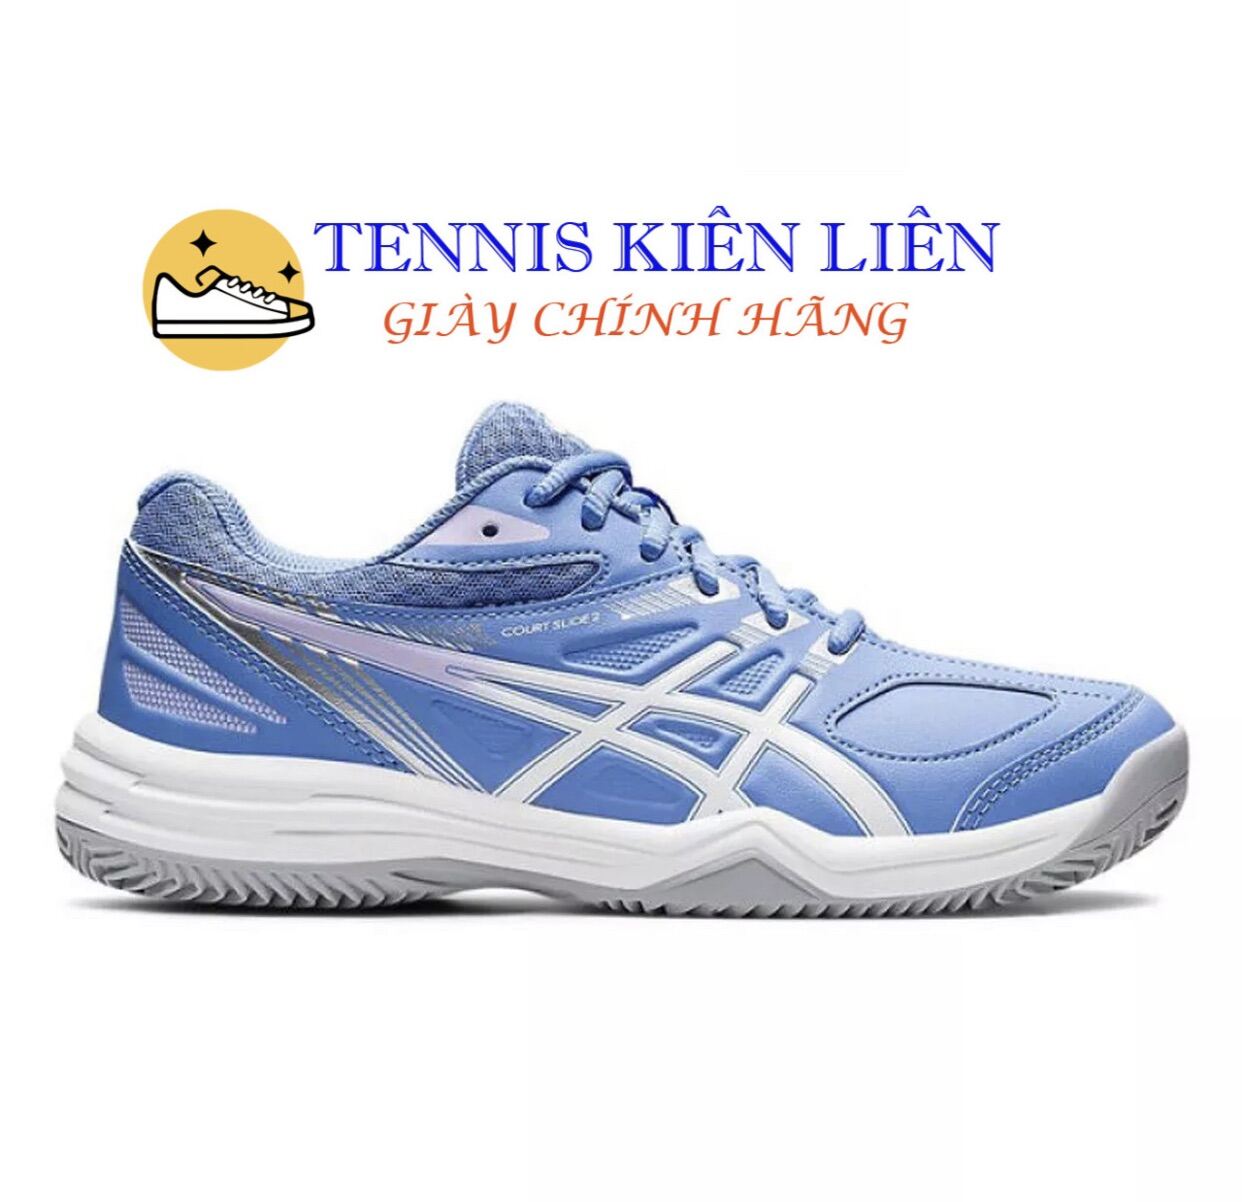 Giày tennis nữ court slide 2